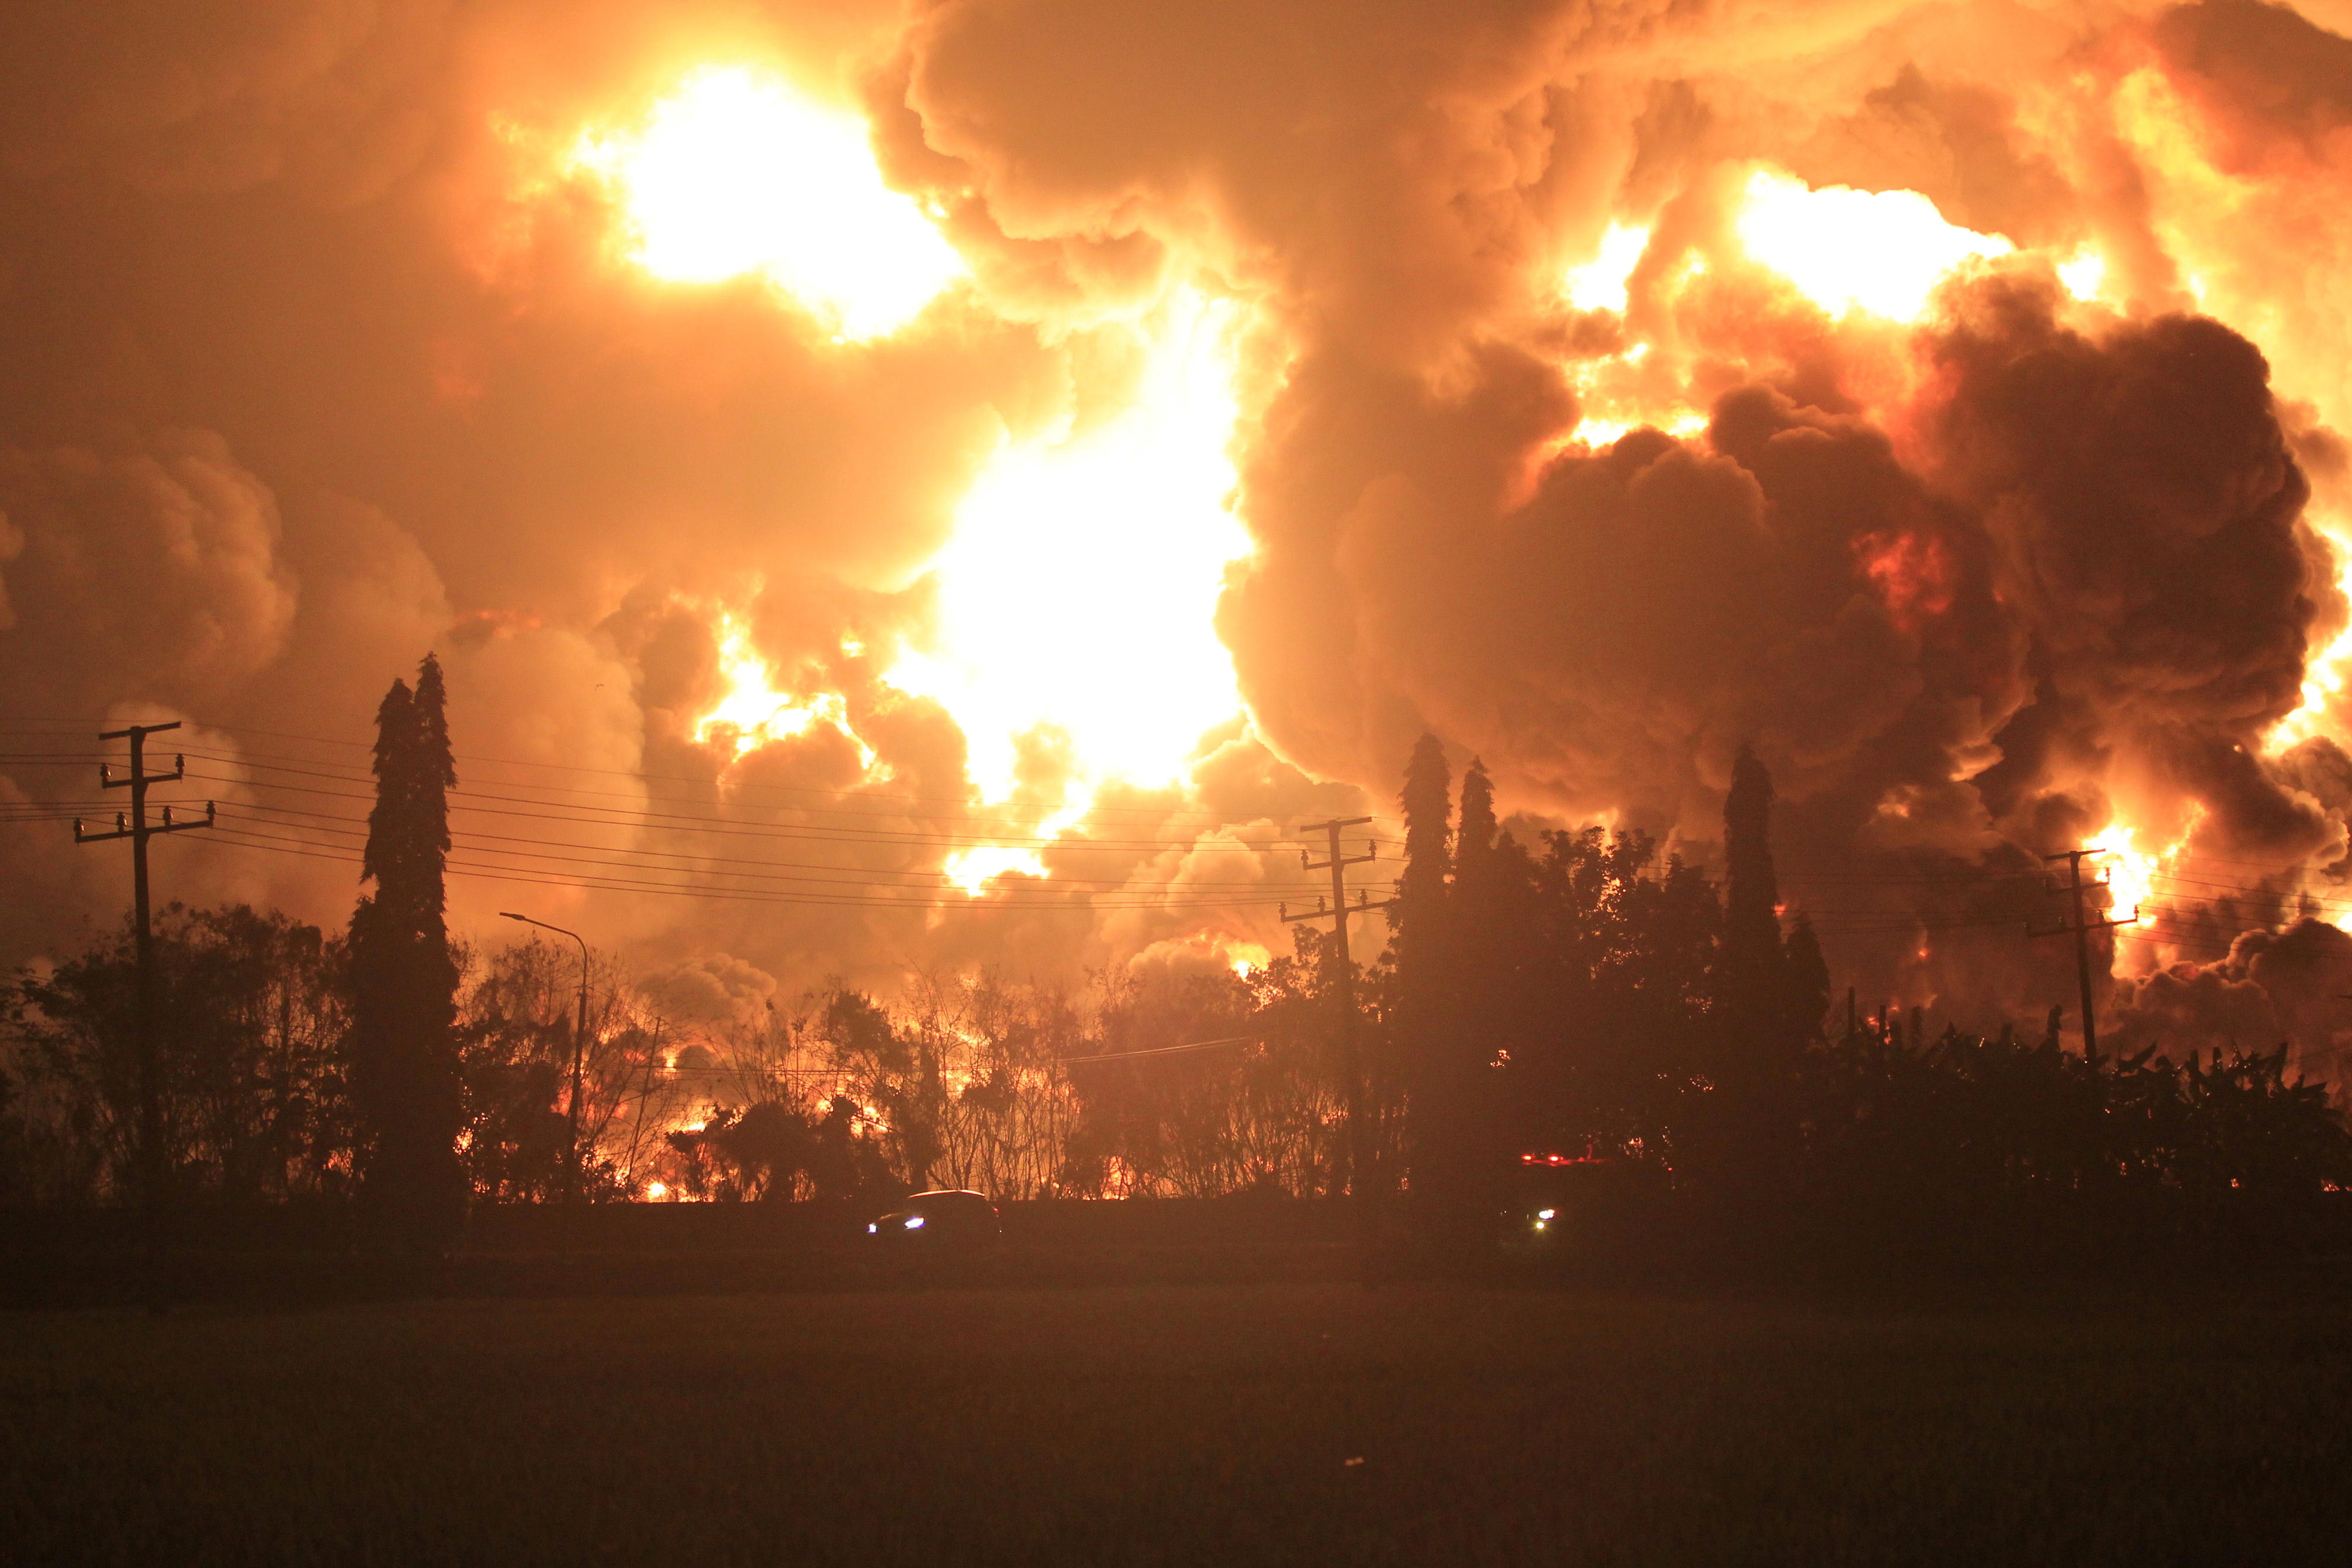 Smoke rises during fire at Pertamina's oil refinery in Balongan, Indramayu regency